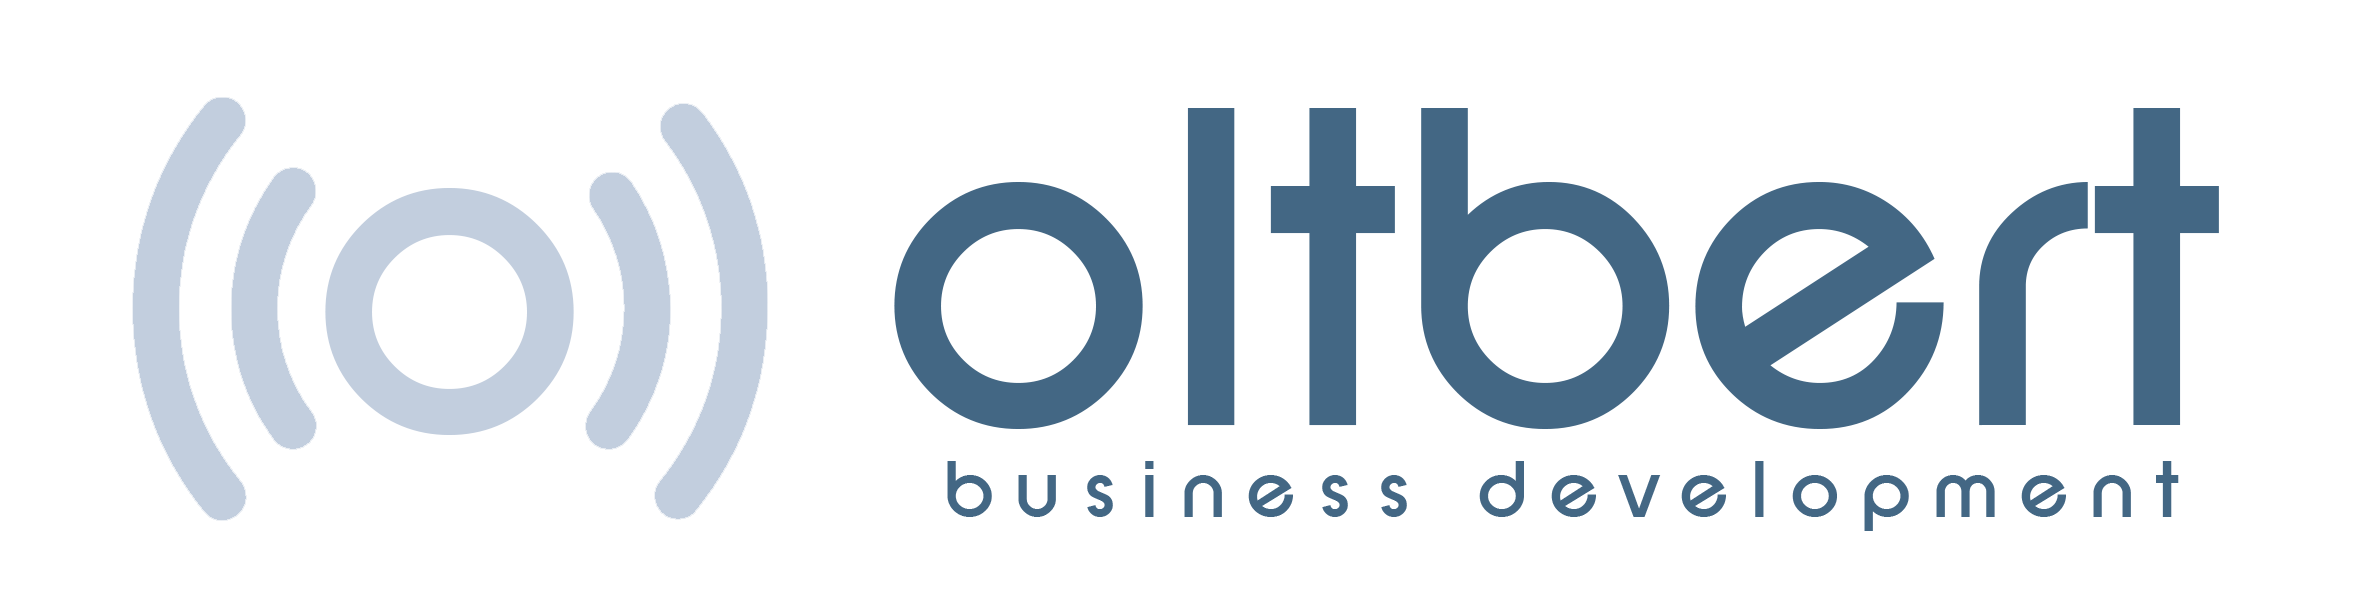 Oltbert BD US logo.png